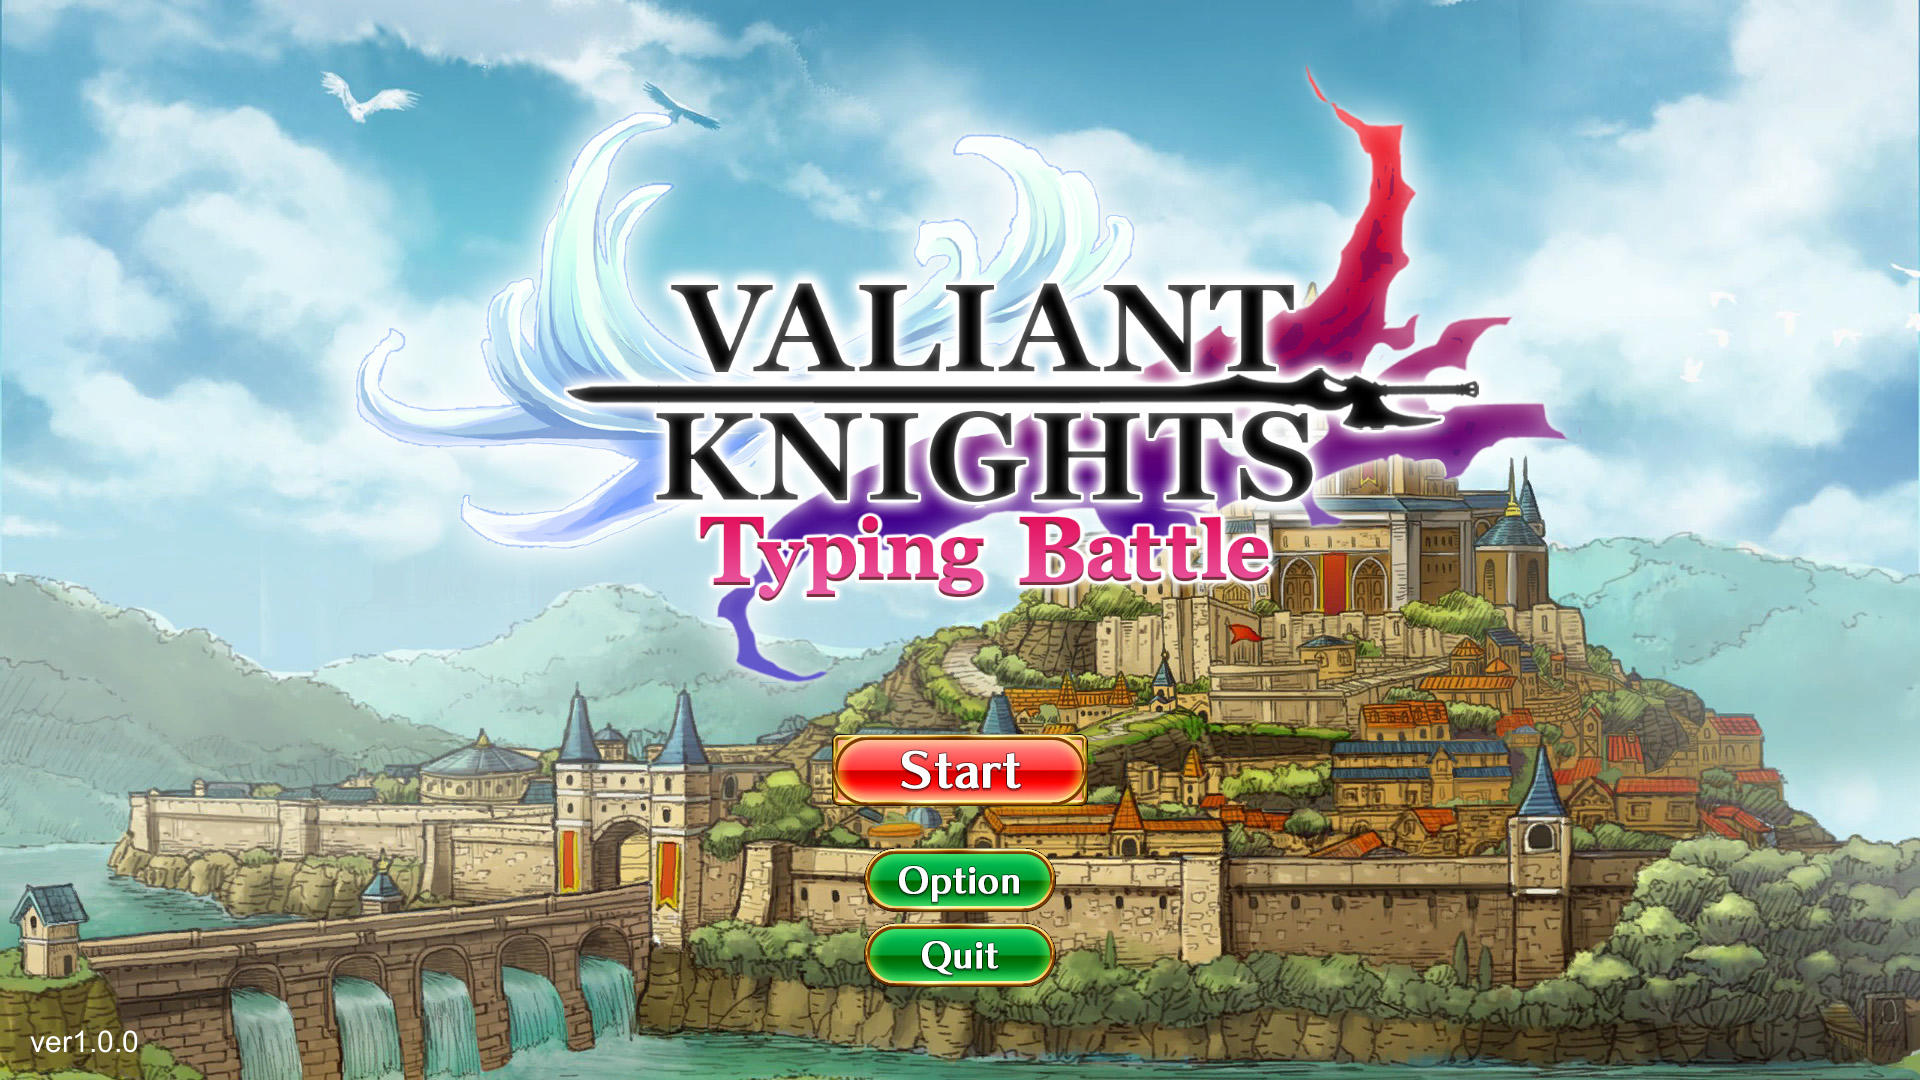 VALIANT KNIGHTS Typing Battle screenshot